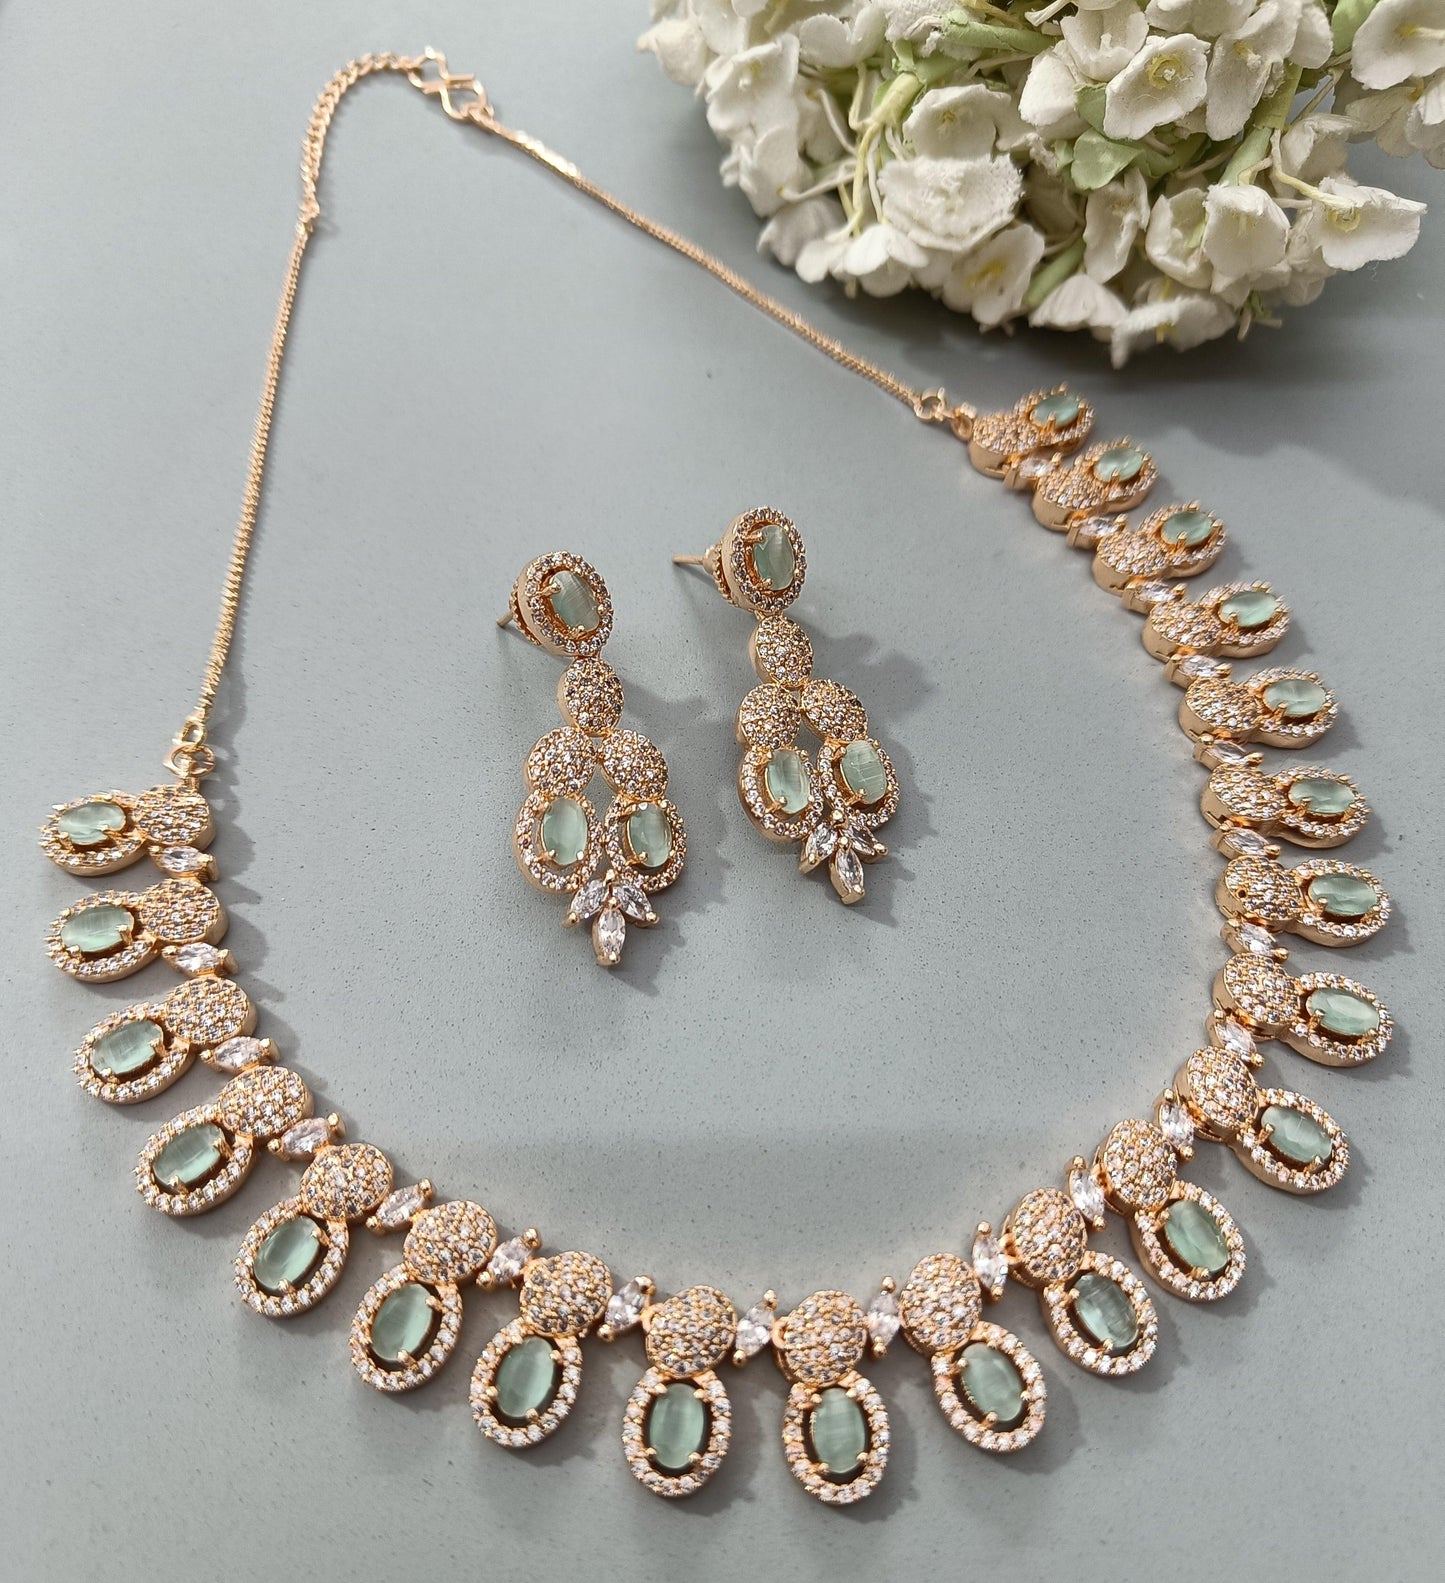 American Diamond Necklace Rosegold Sku 5969 C3 - rchiecreation